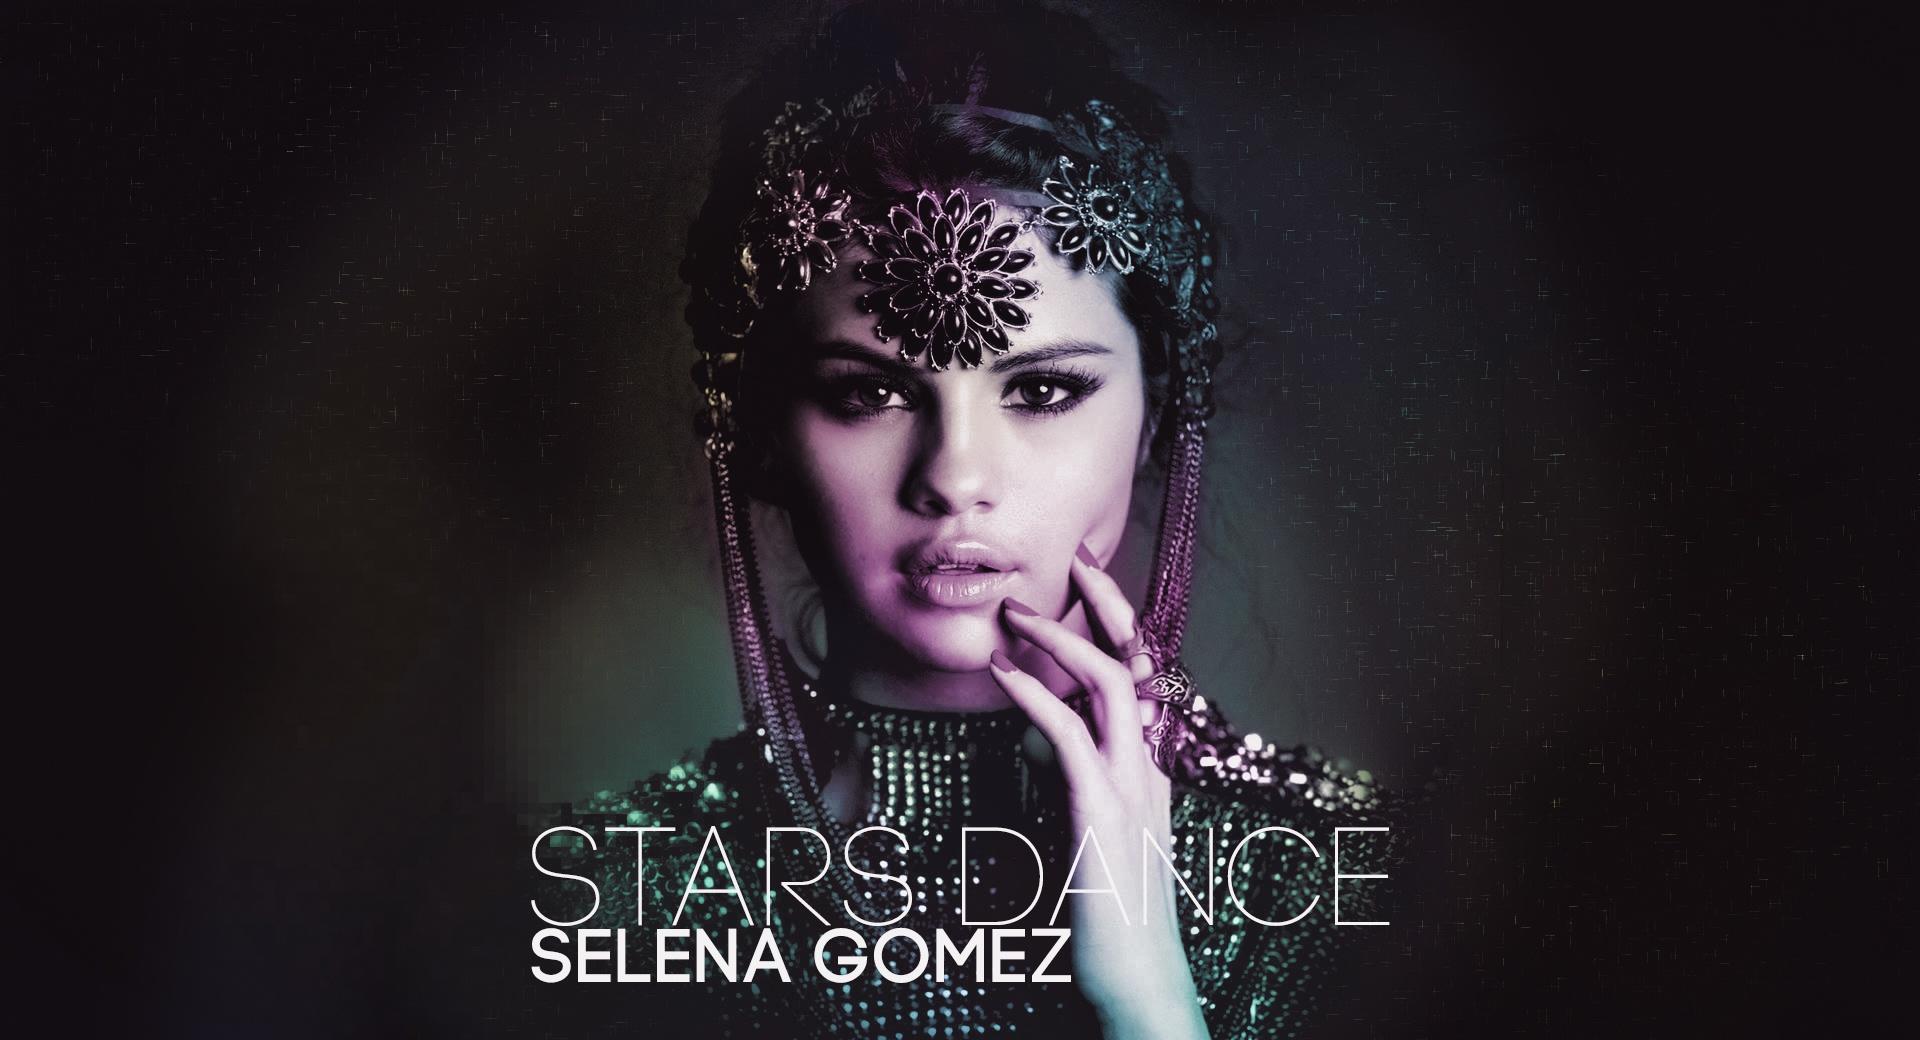 Selena Gomez - Stars Dance at 2048 x 2048 iPad size wallpapers HD quality